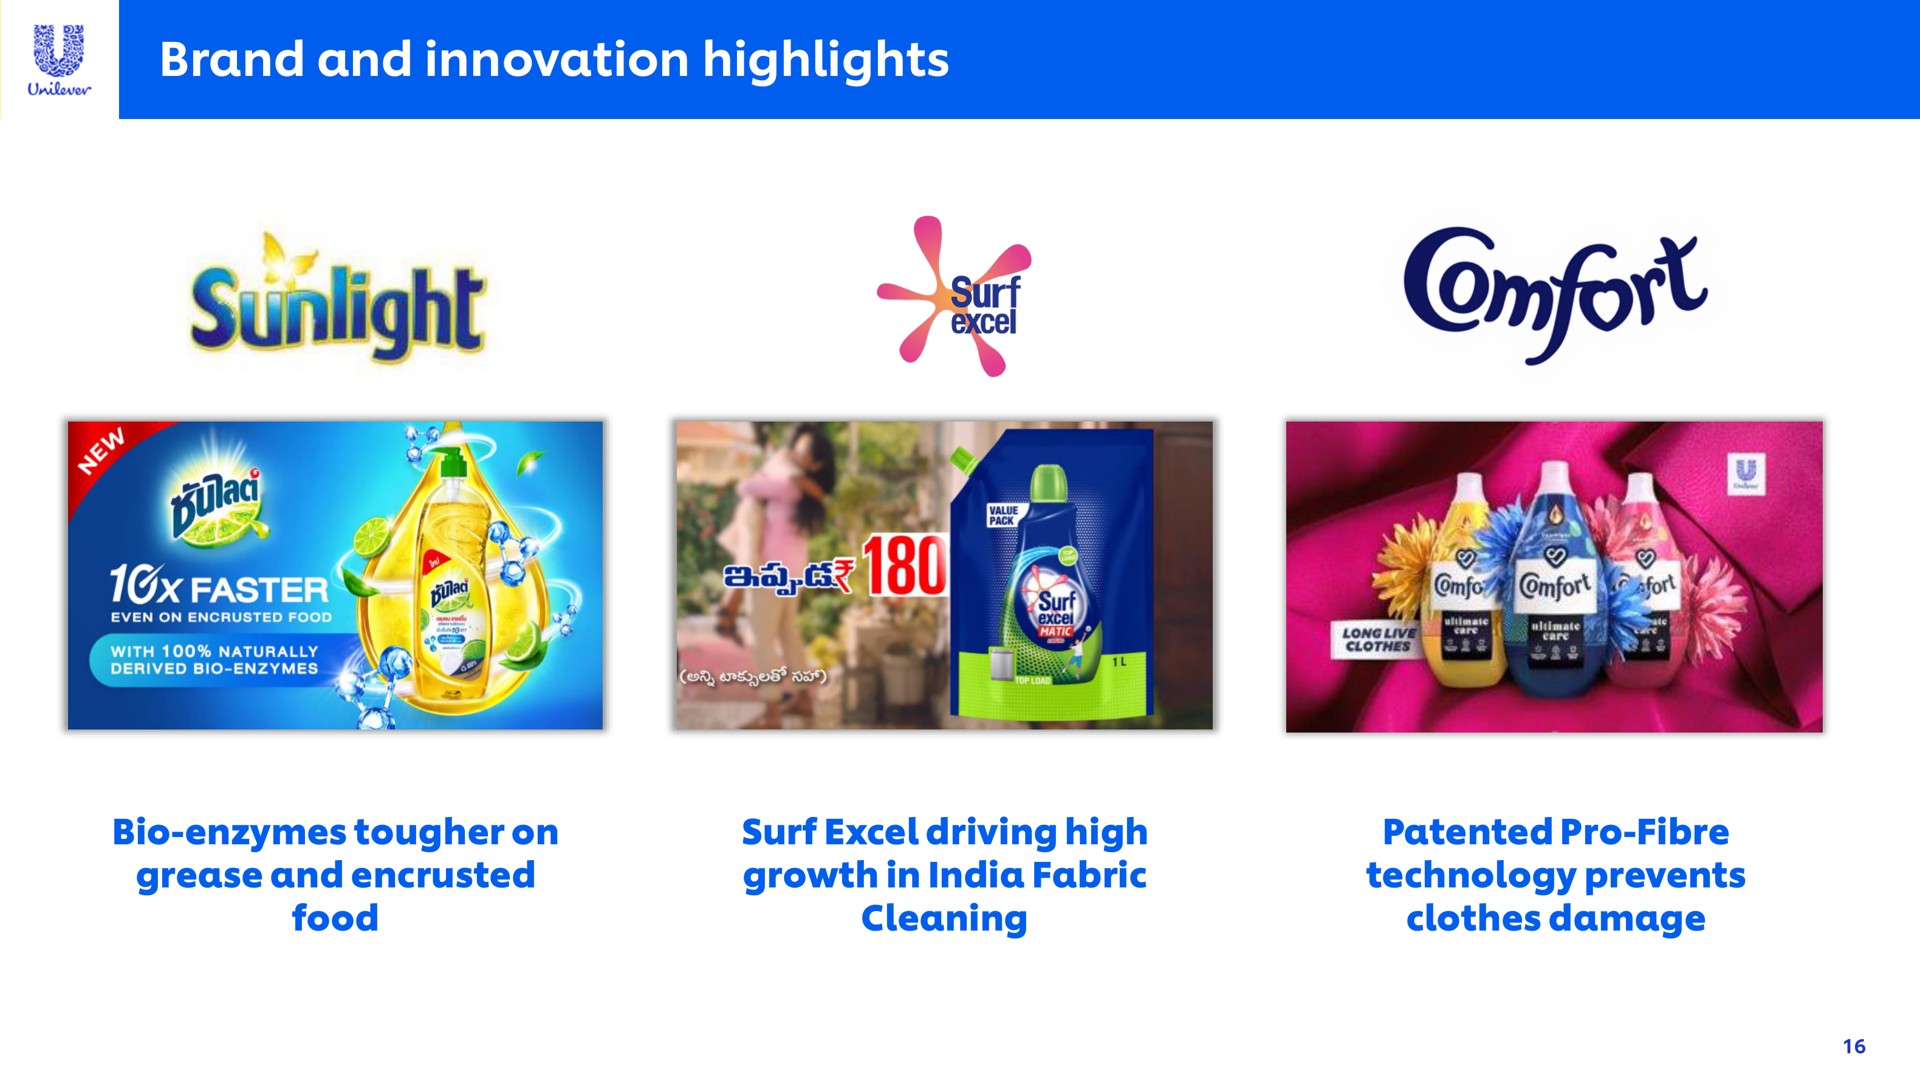 brand and innovation highlights a sunlight | Unilever